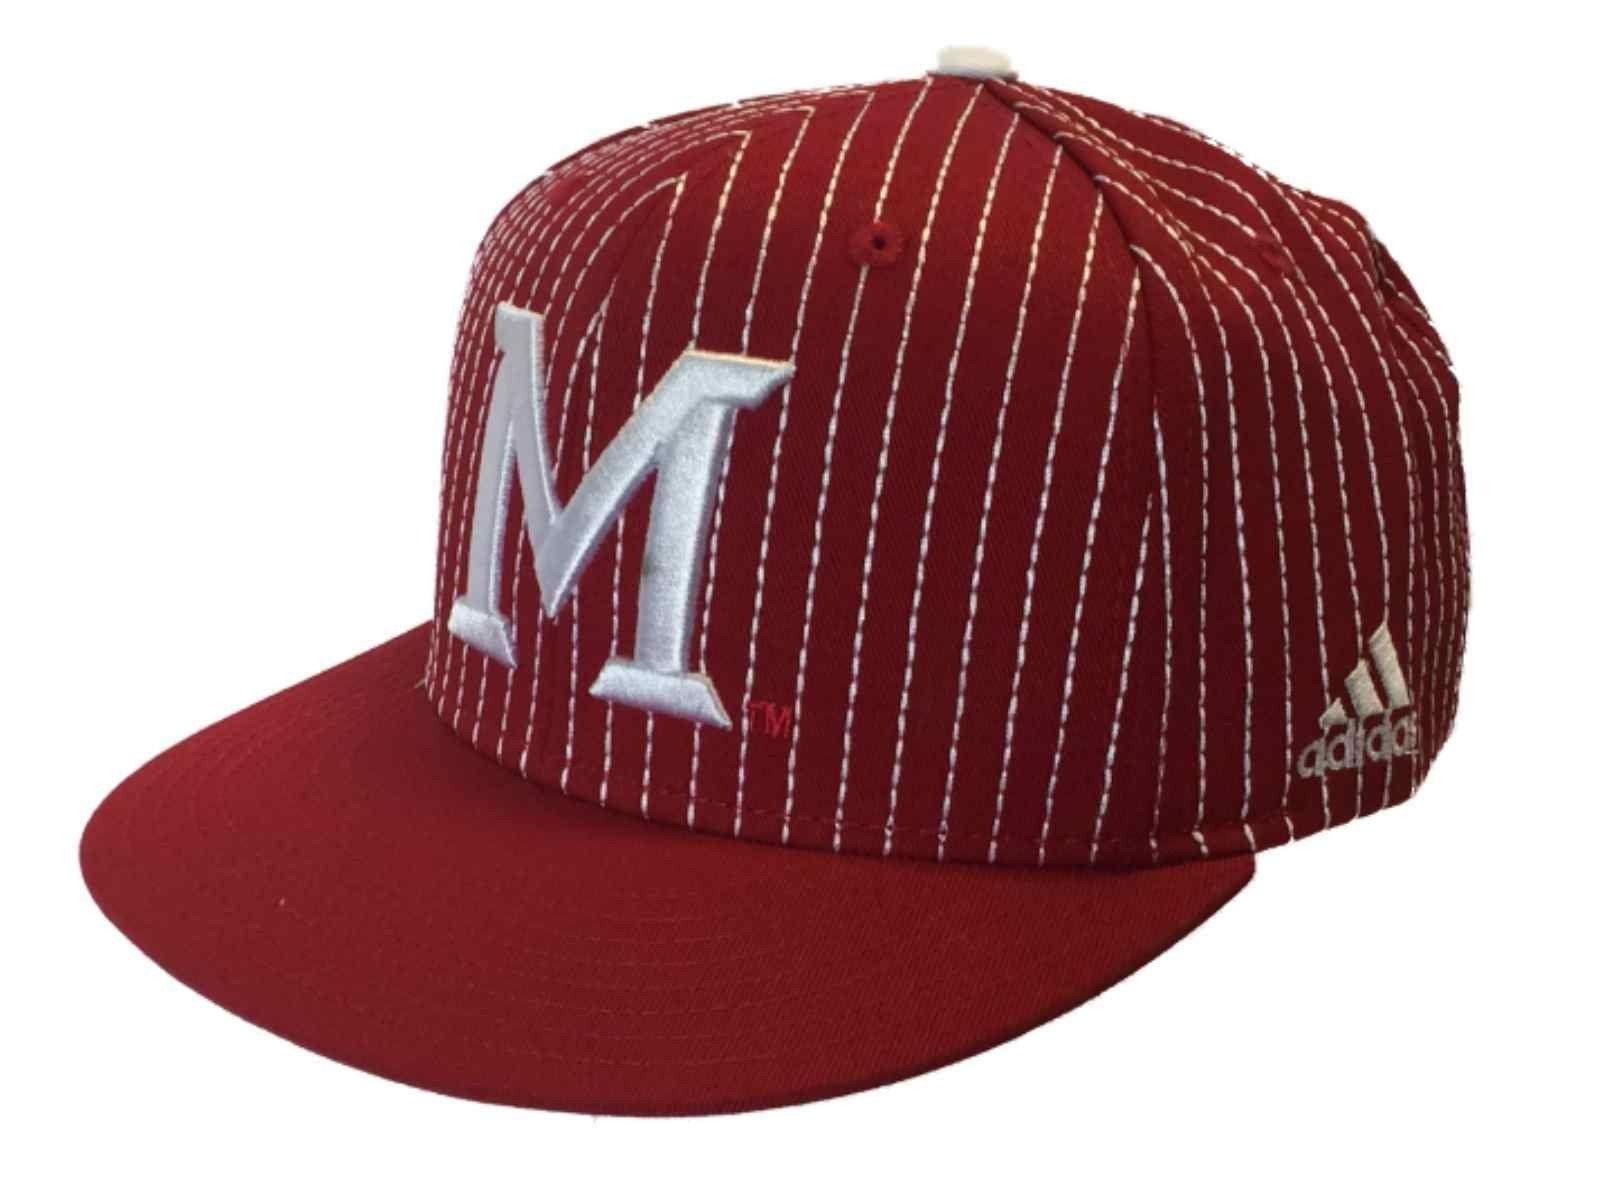 Red and White M Logo - Miami Heat Adidas Red White M Logo Flat Bill Cotton Snapback Adj Hat